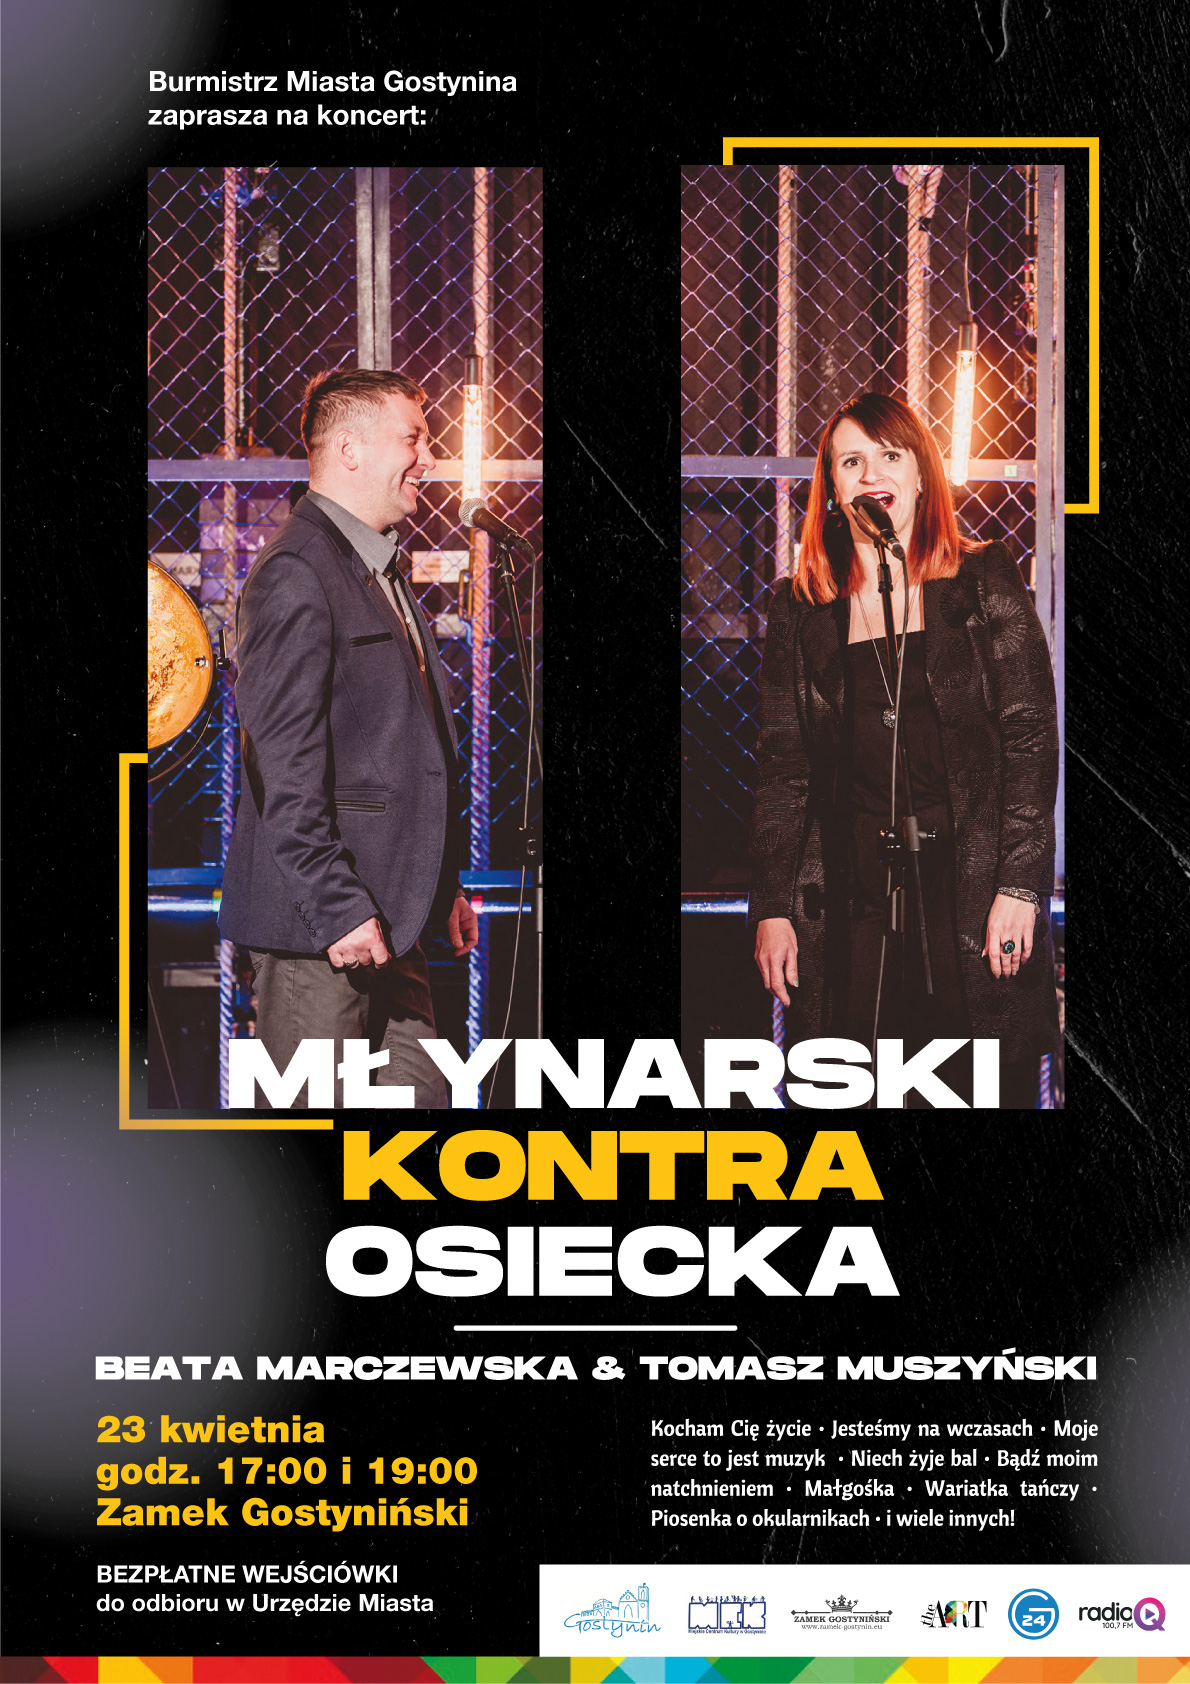 23/04 ǀ Koncert Młynarski kontra Osiecka